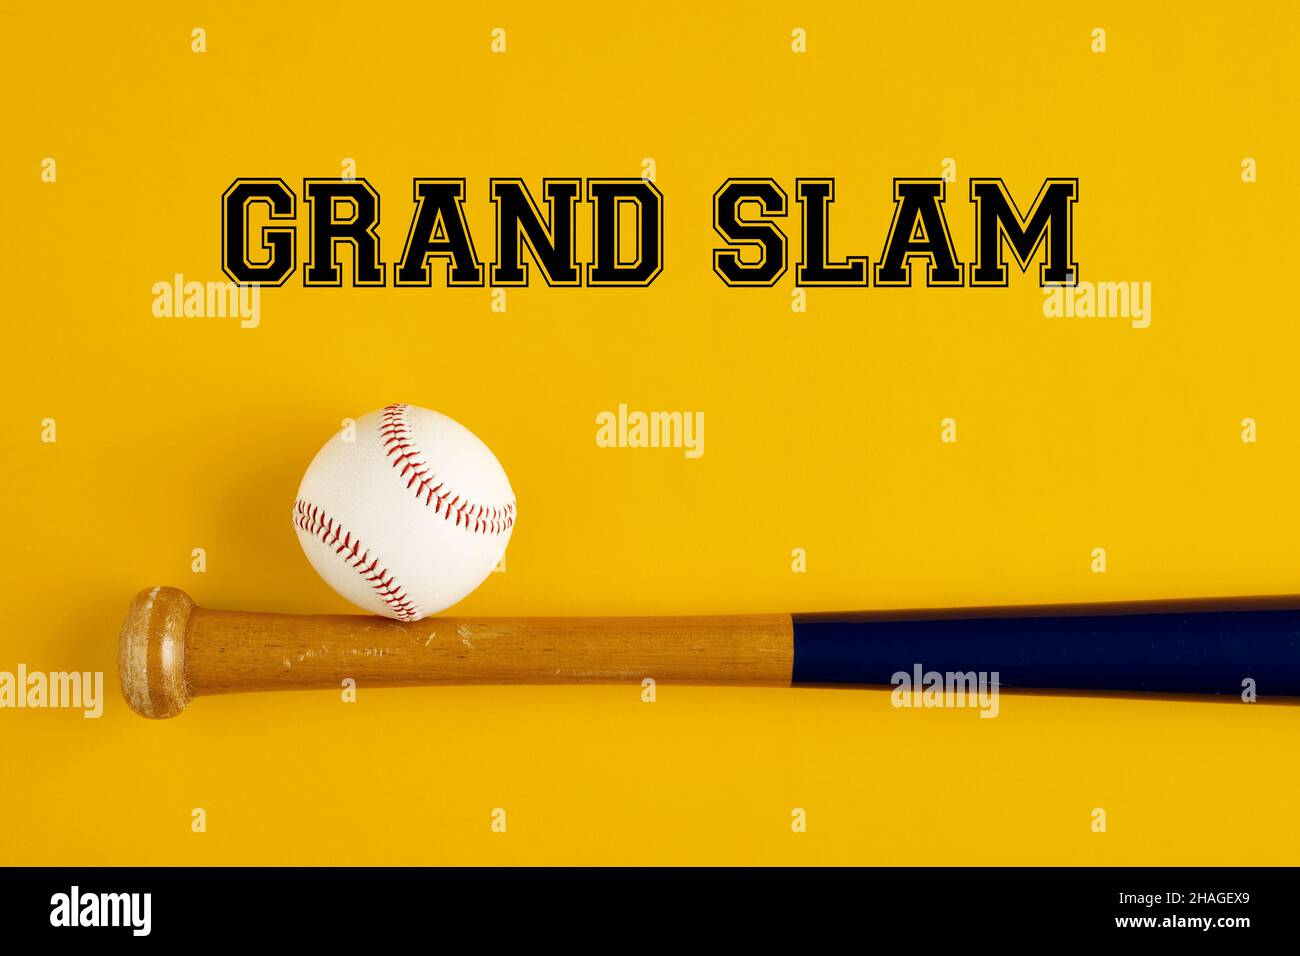 Bate de béisbol y una pelota sobre fondo amarillo con la palabra grand slam. Concepto de términos de béisbol. Foto de stock